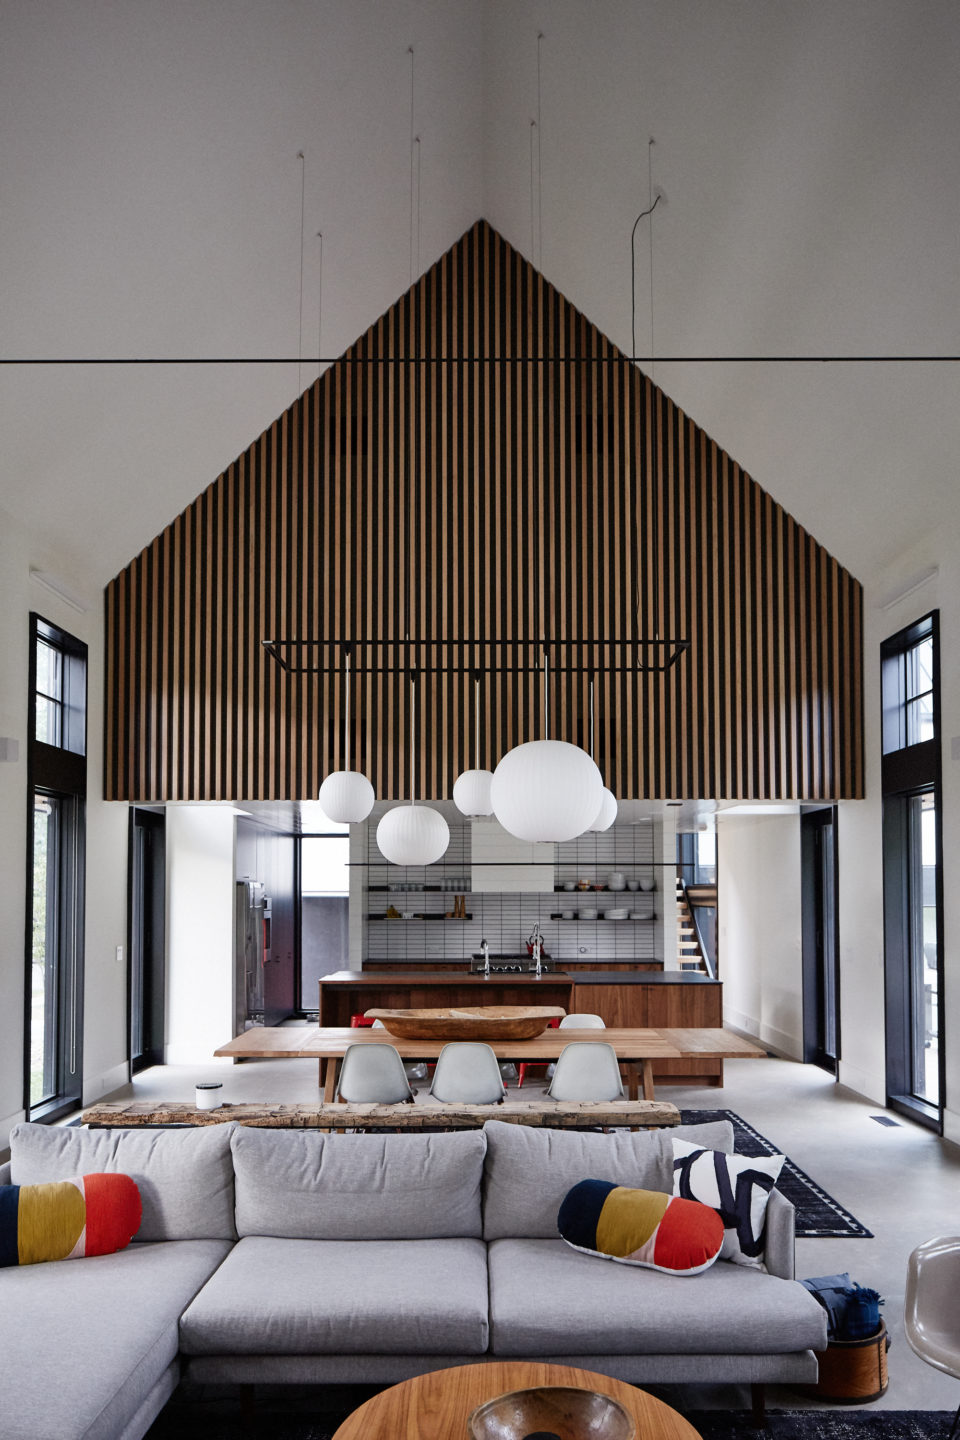 evergreen-portfolio-danish-modern-shingle-home-interior-DR-dining-room-kitchen-LR-living-room-paneling